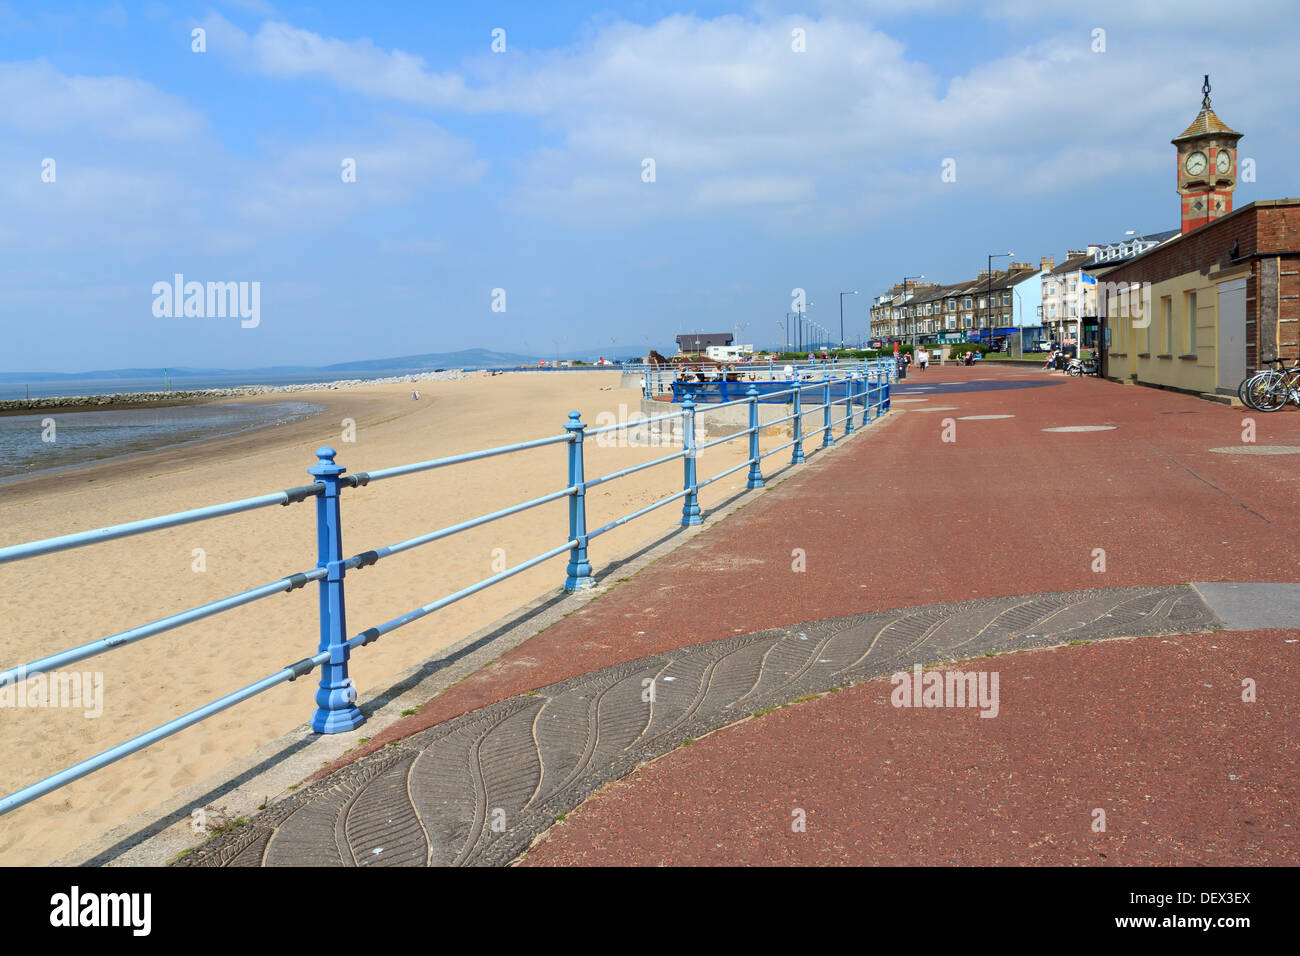 Sea front and beach at Morecambe Lancashire England UK Europe Stock Photo